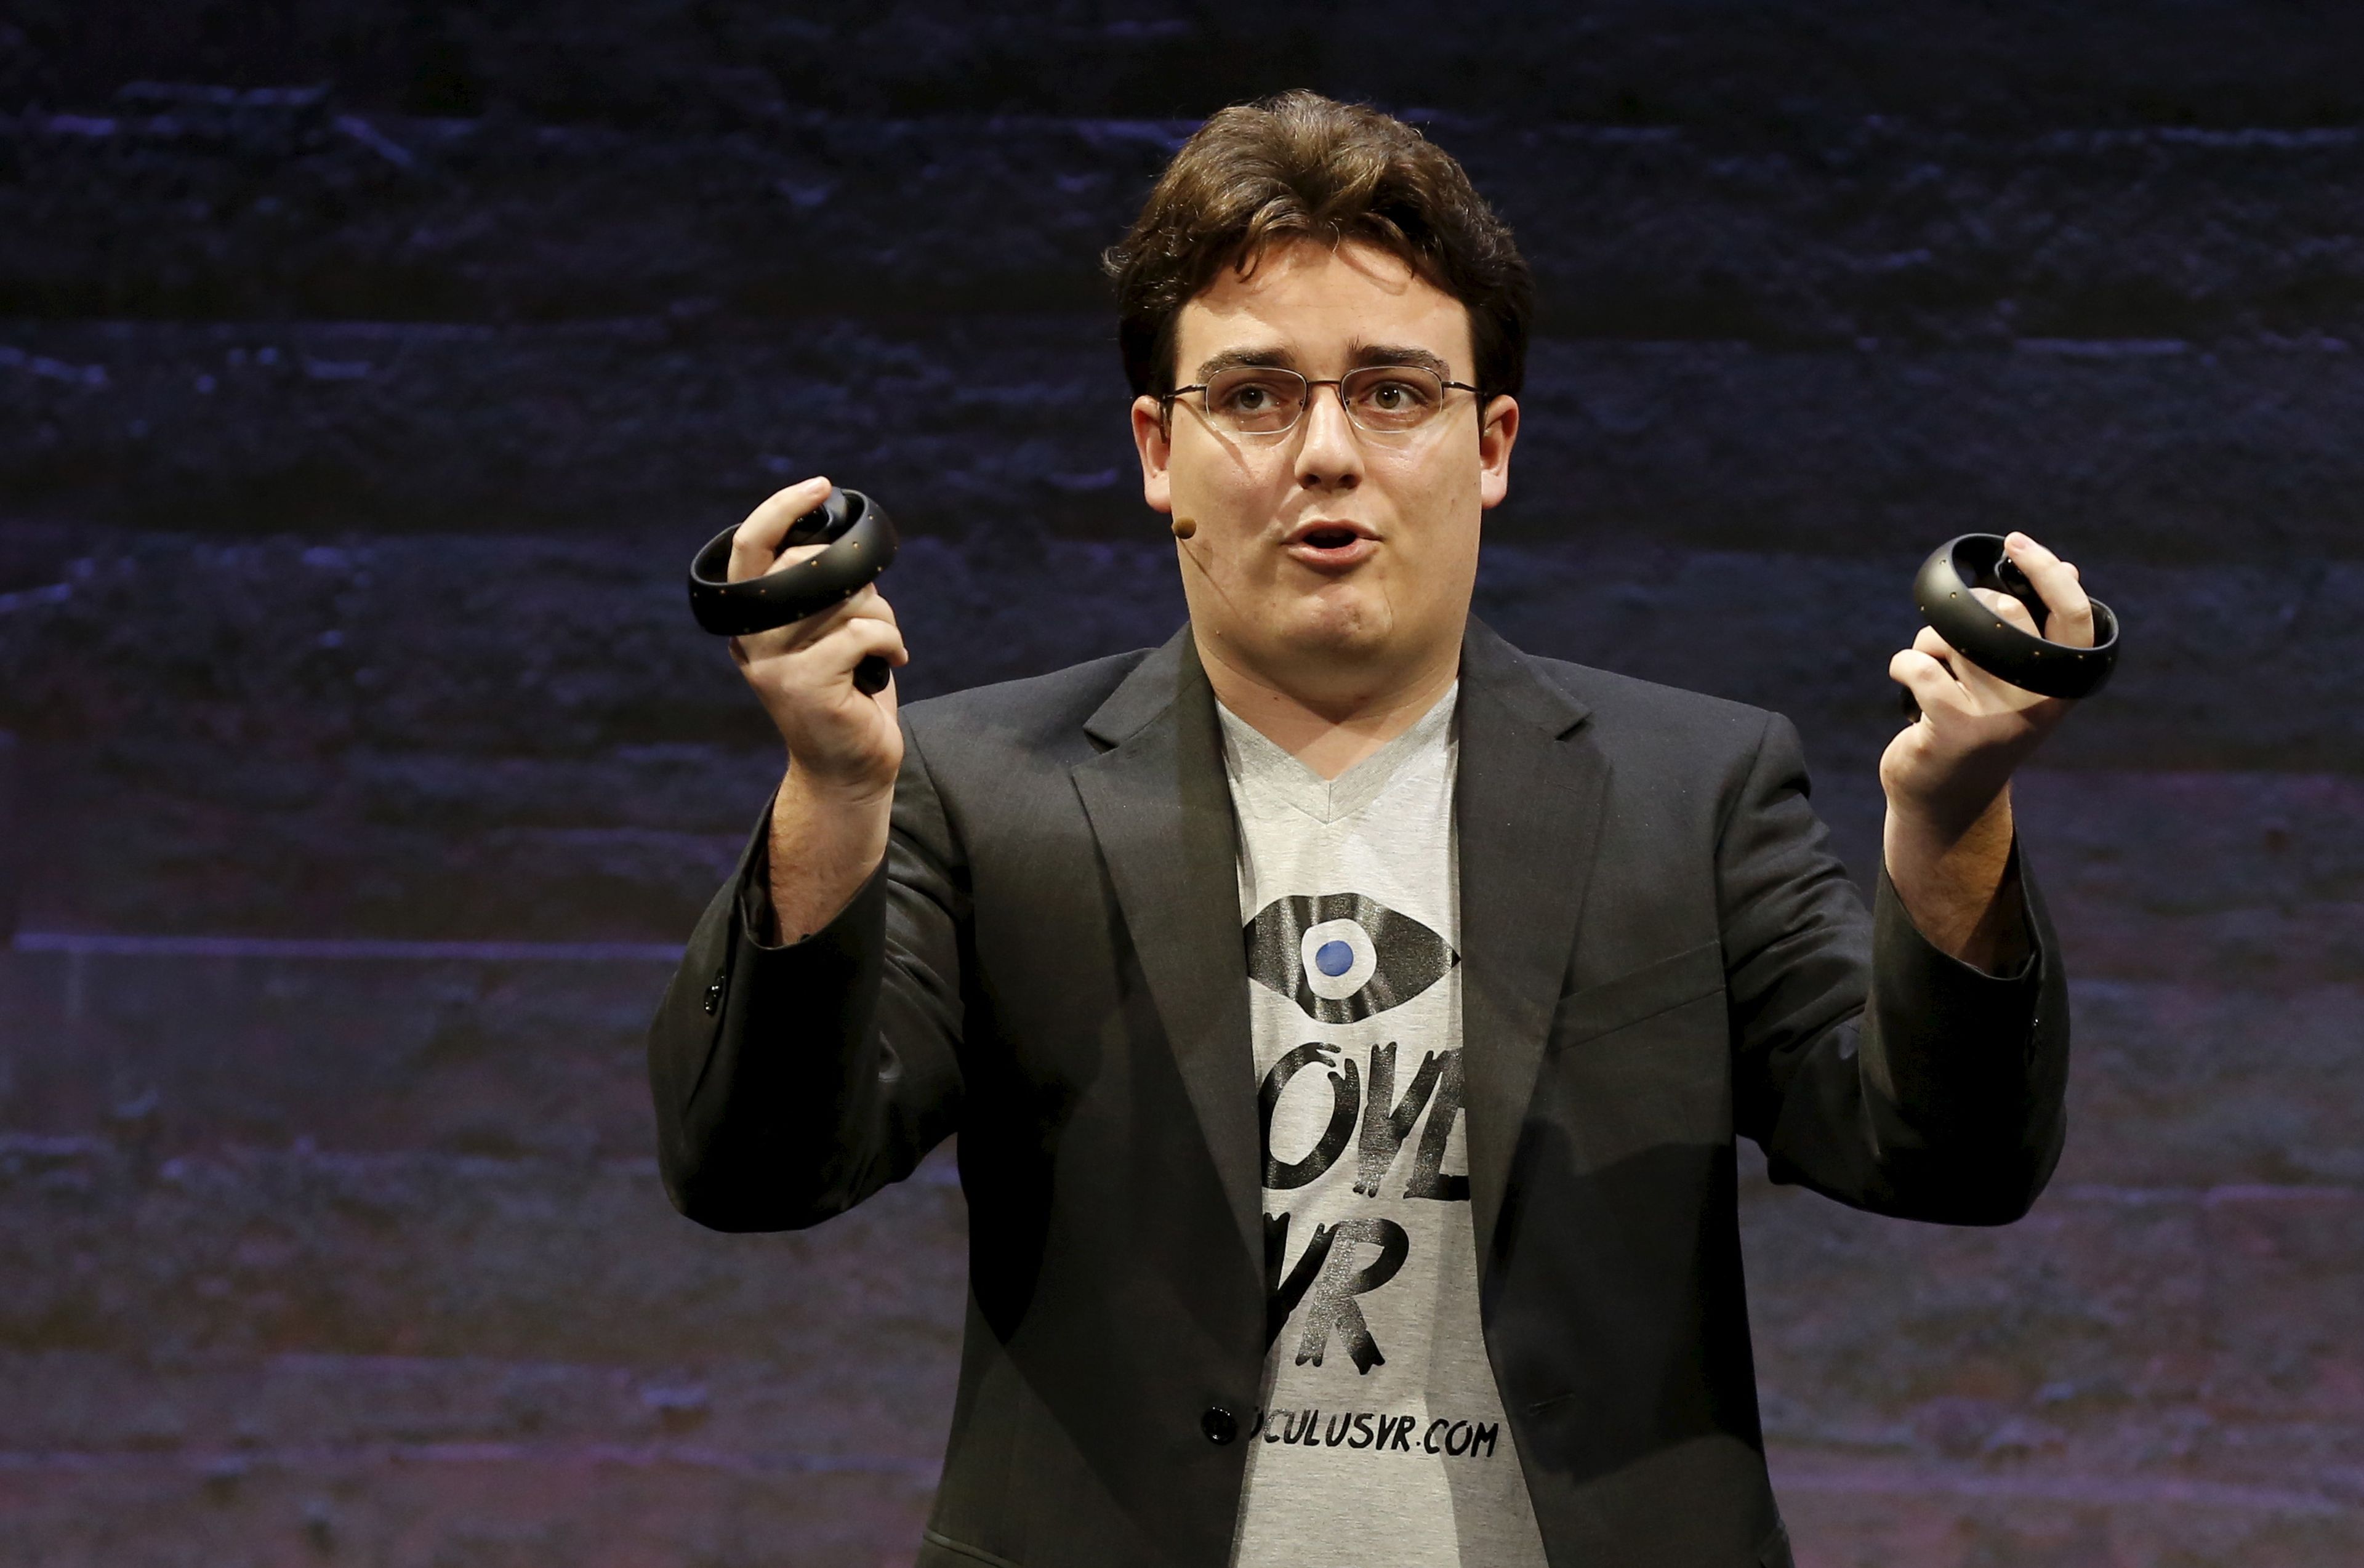 Palmer Luckey en 2015 presentando productos de Oculus